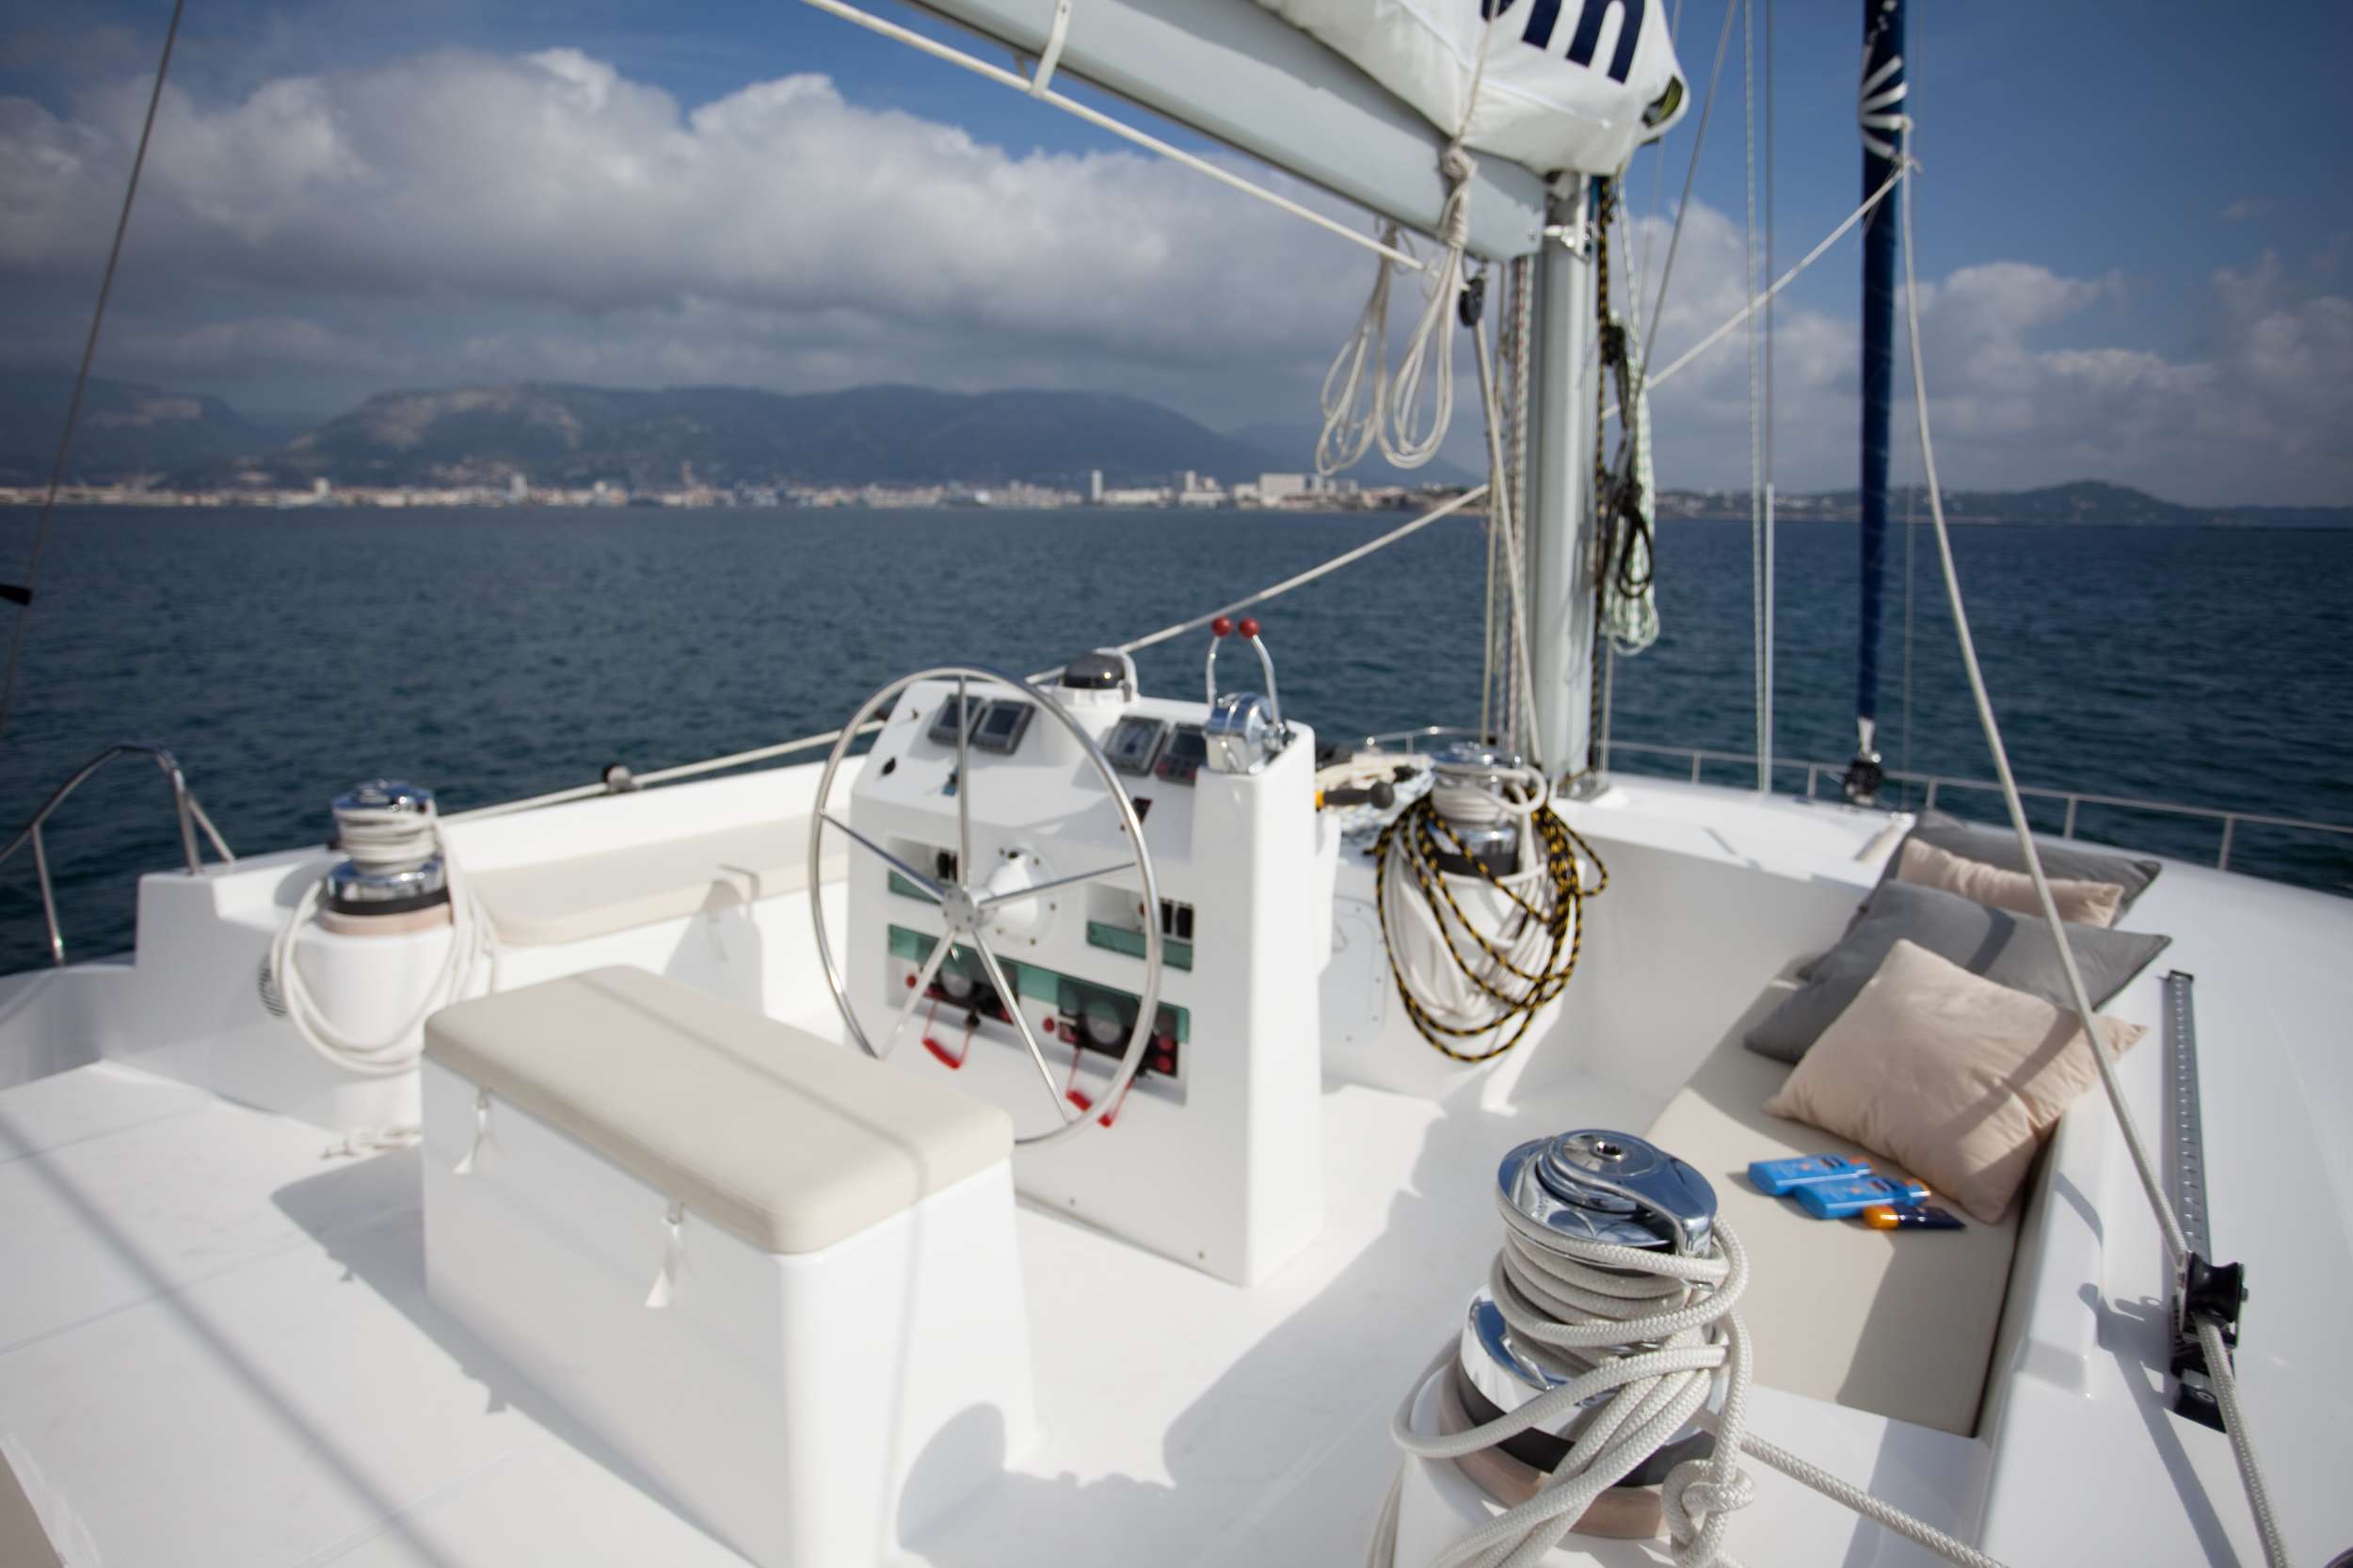 Dream 60 - Littr&eacute; &amp; Tauceti - Yacht Charter El Nido & Boat hire in W. Med -Naples/Sicily, W. Med - Spain/Balearics, Croatia Bahamas, Indian Ocean and SE Asia 4